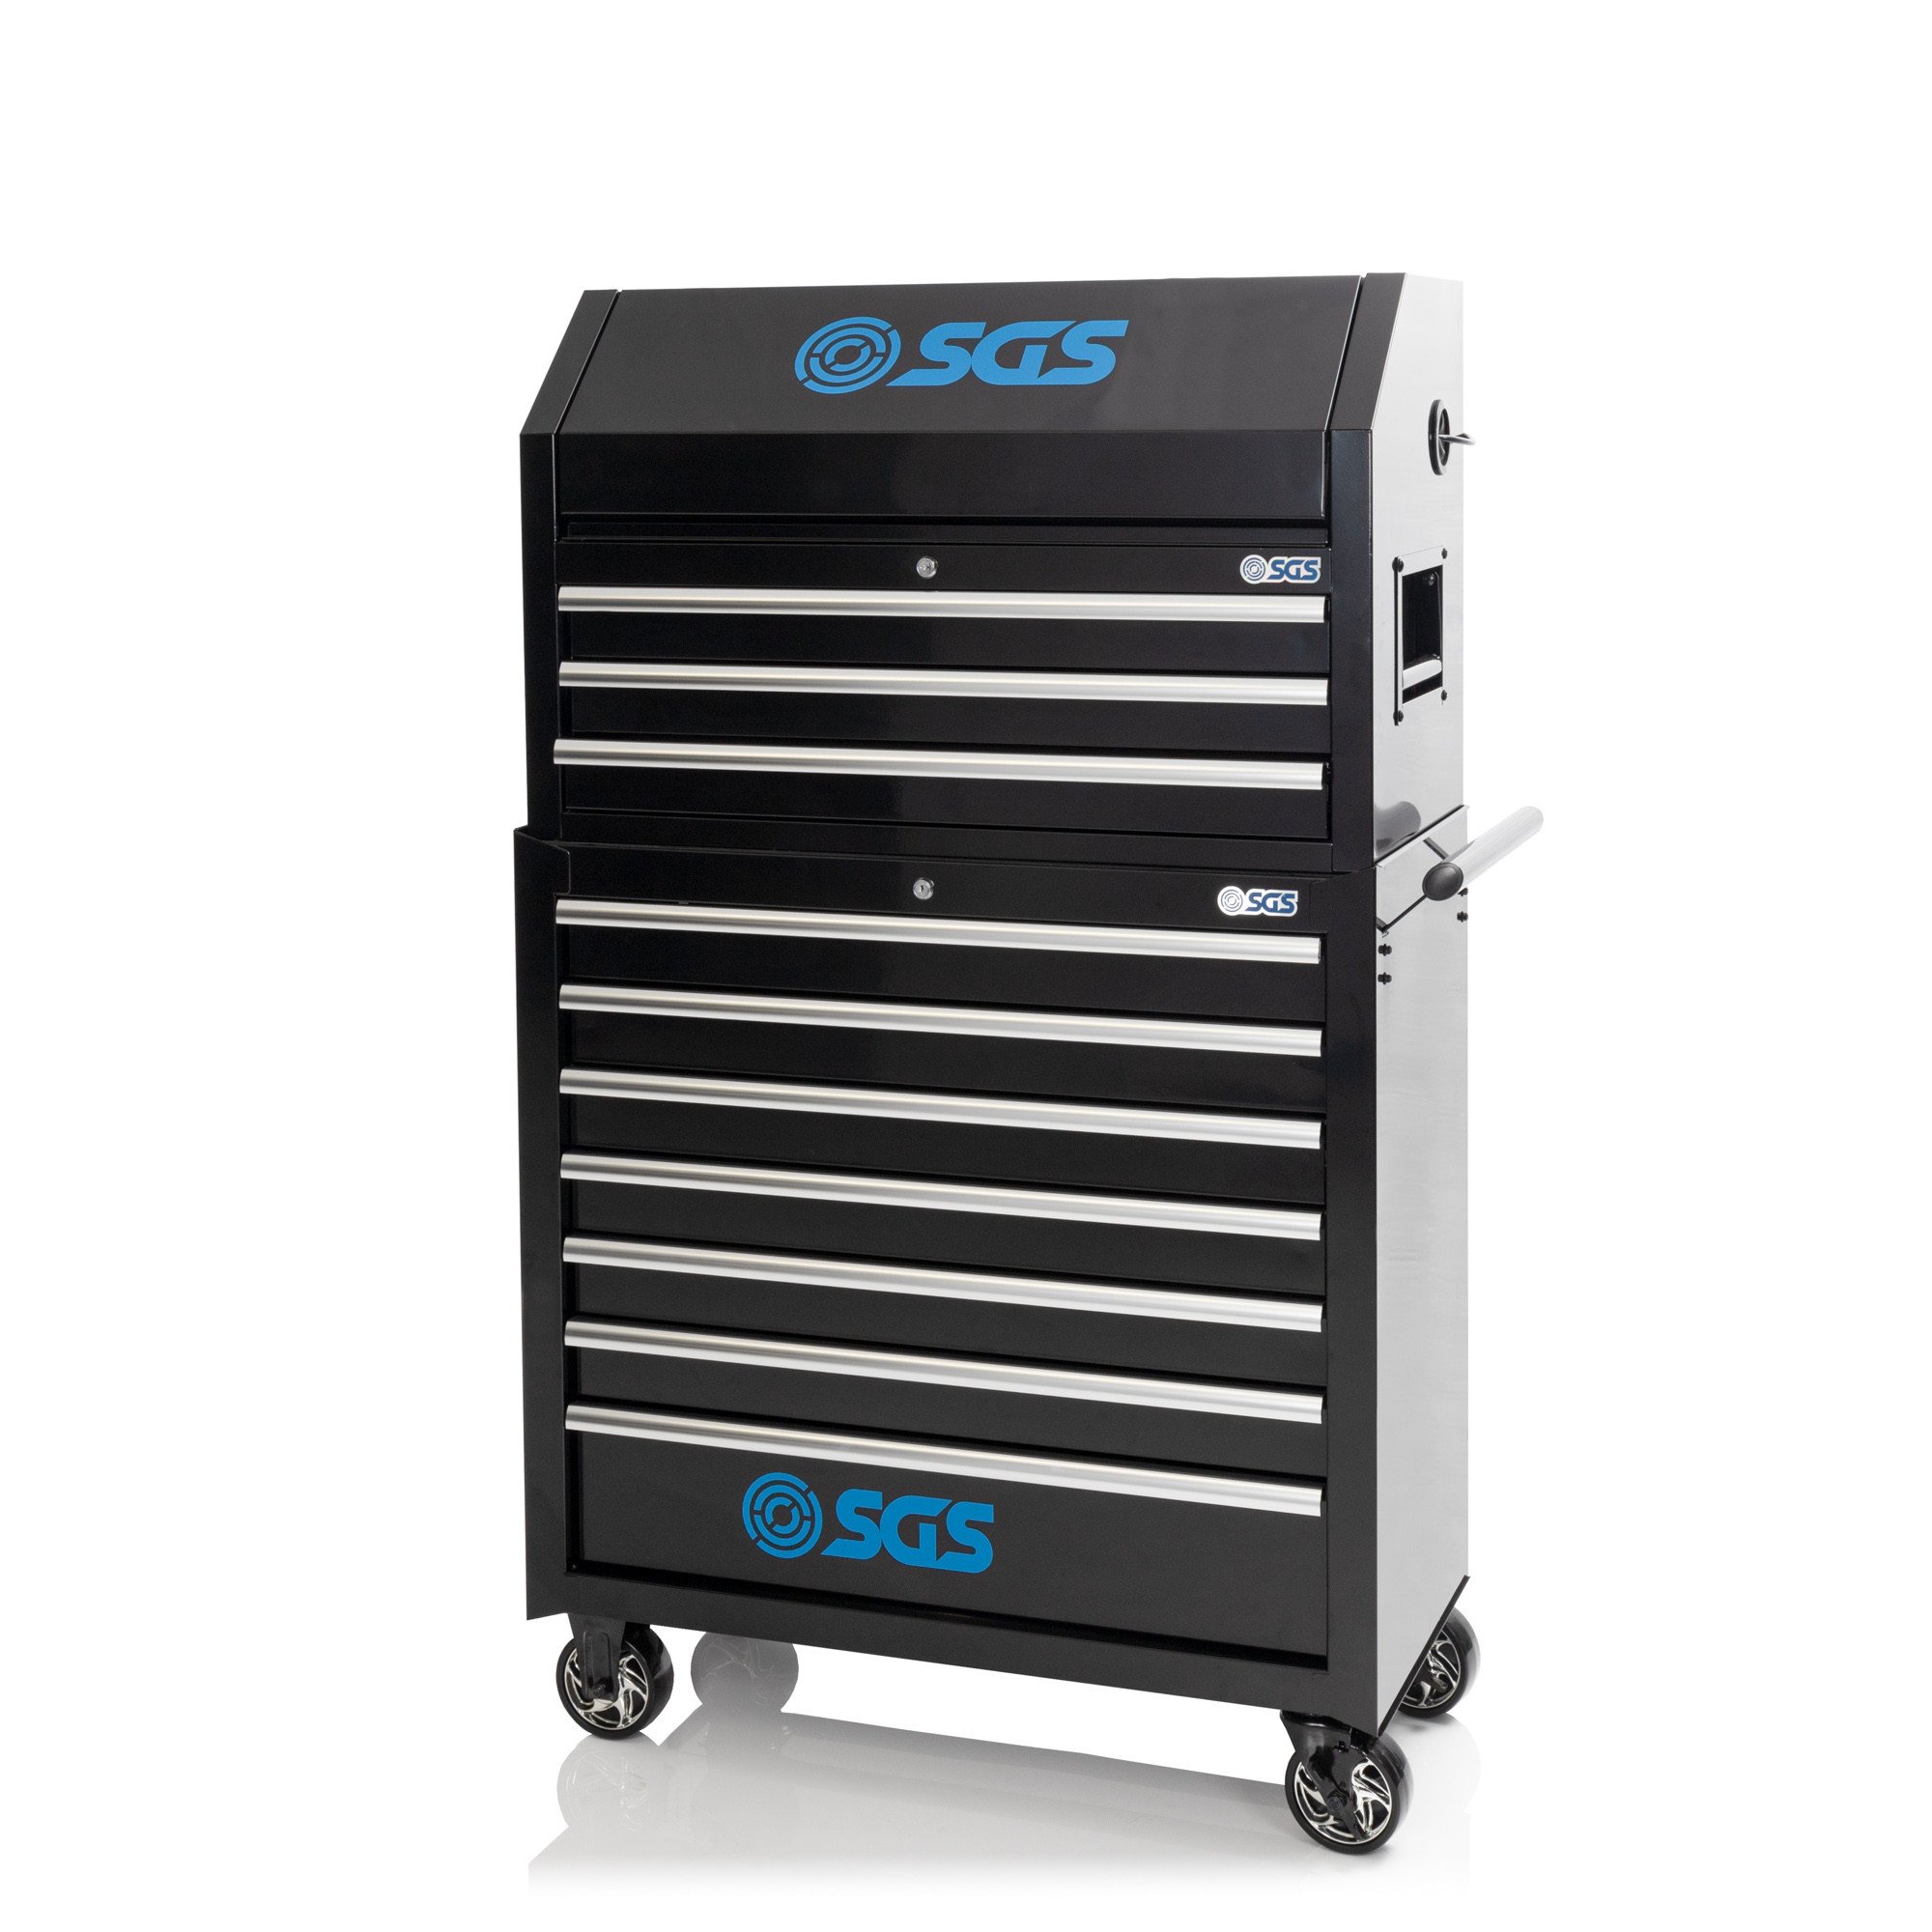 SGS 36 10抽屉专业工具箱和滚筒柜带电源插座